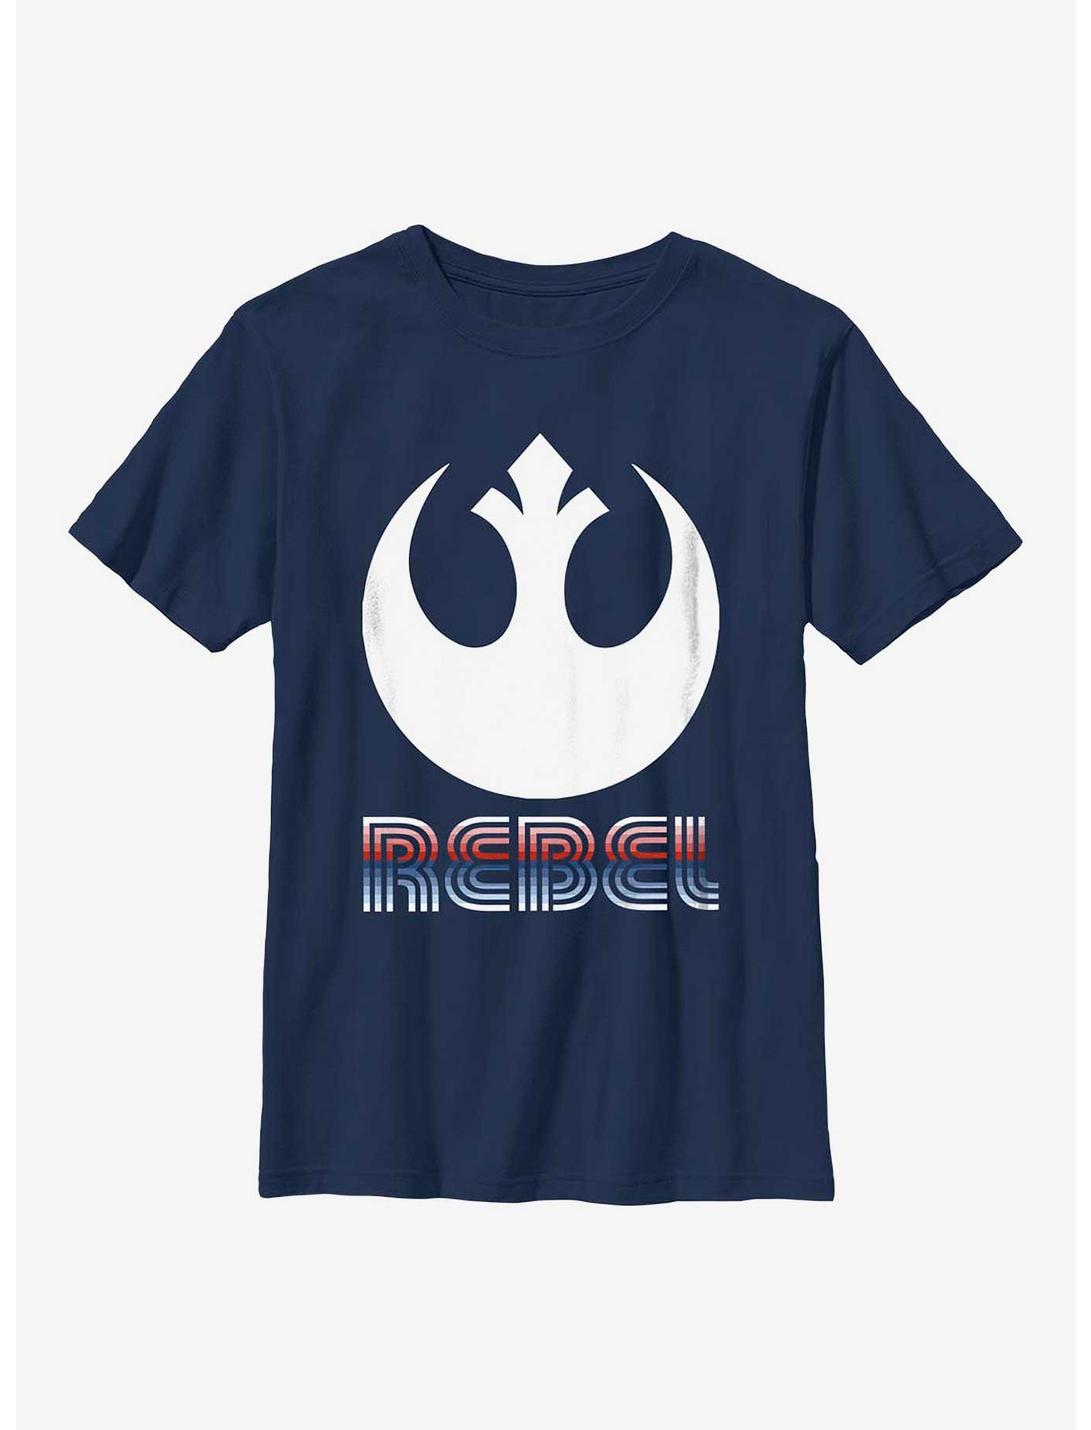 Star Wars Striped Rebel Emblem Youth T-Shirt, NAVY, hi-res